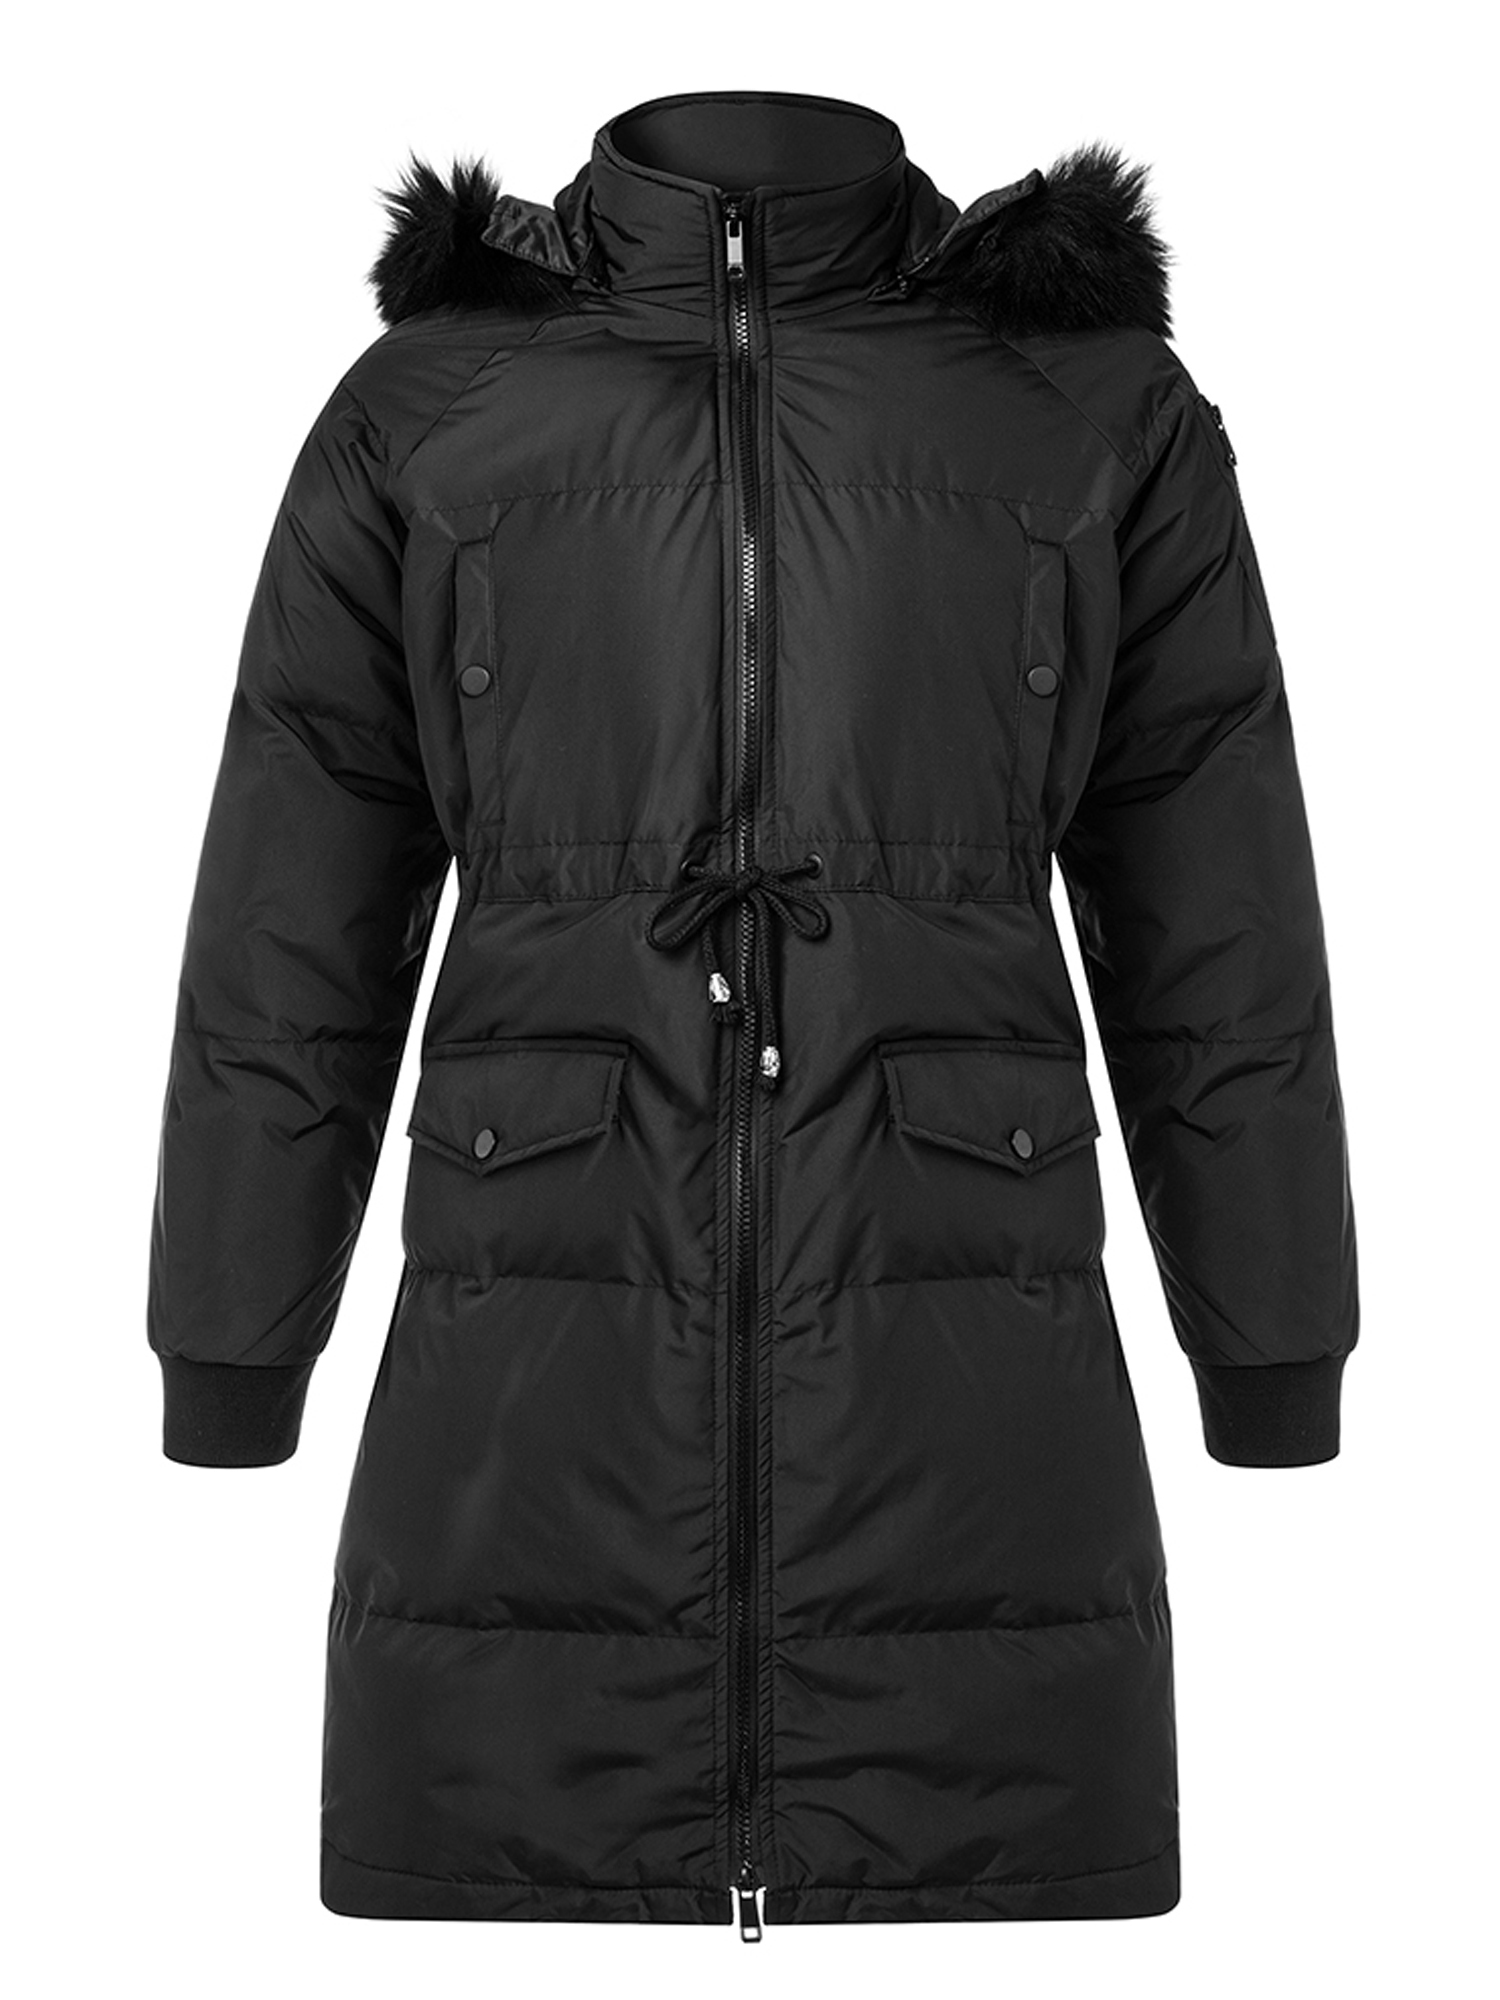 LELINTA Women's Plus Size Winter Warm Zipper Hoodie Long Jacket Waterproof Jacket Hooded Lightweight Raincoat Active Outdoor Trench Coat - image 3 of 7